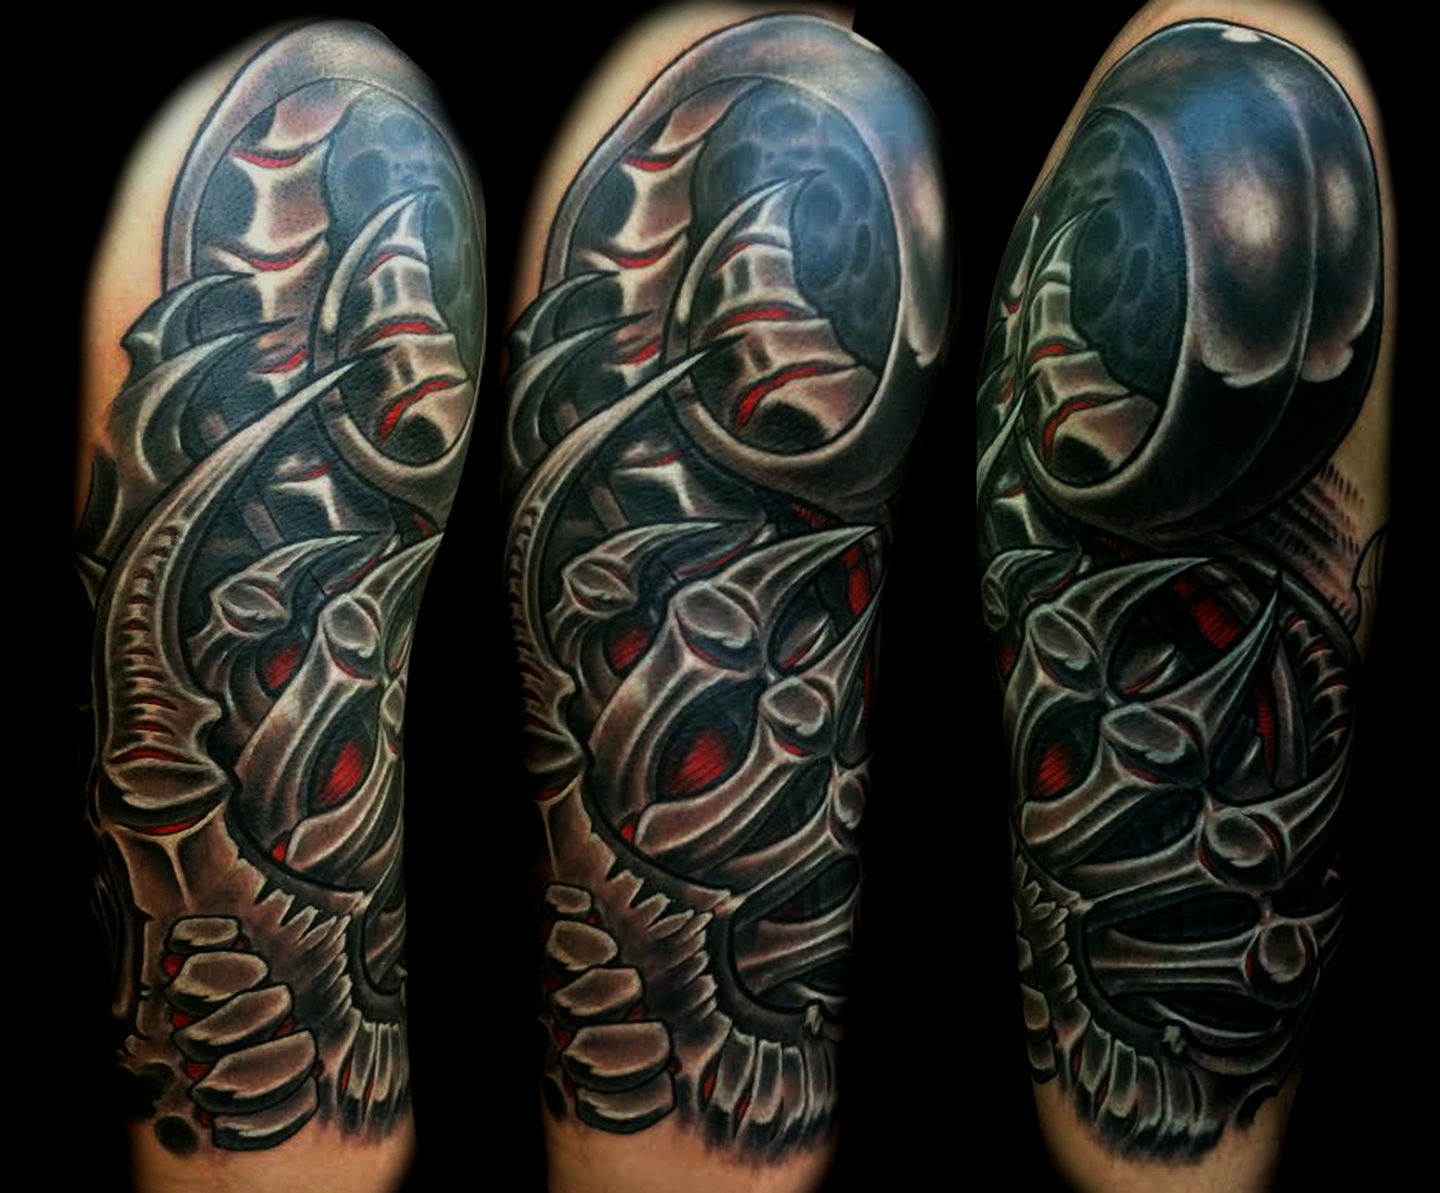 Las-vegas-tattoo-artist_joe-riley_biomech-black-and-grey